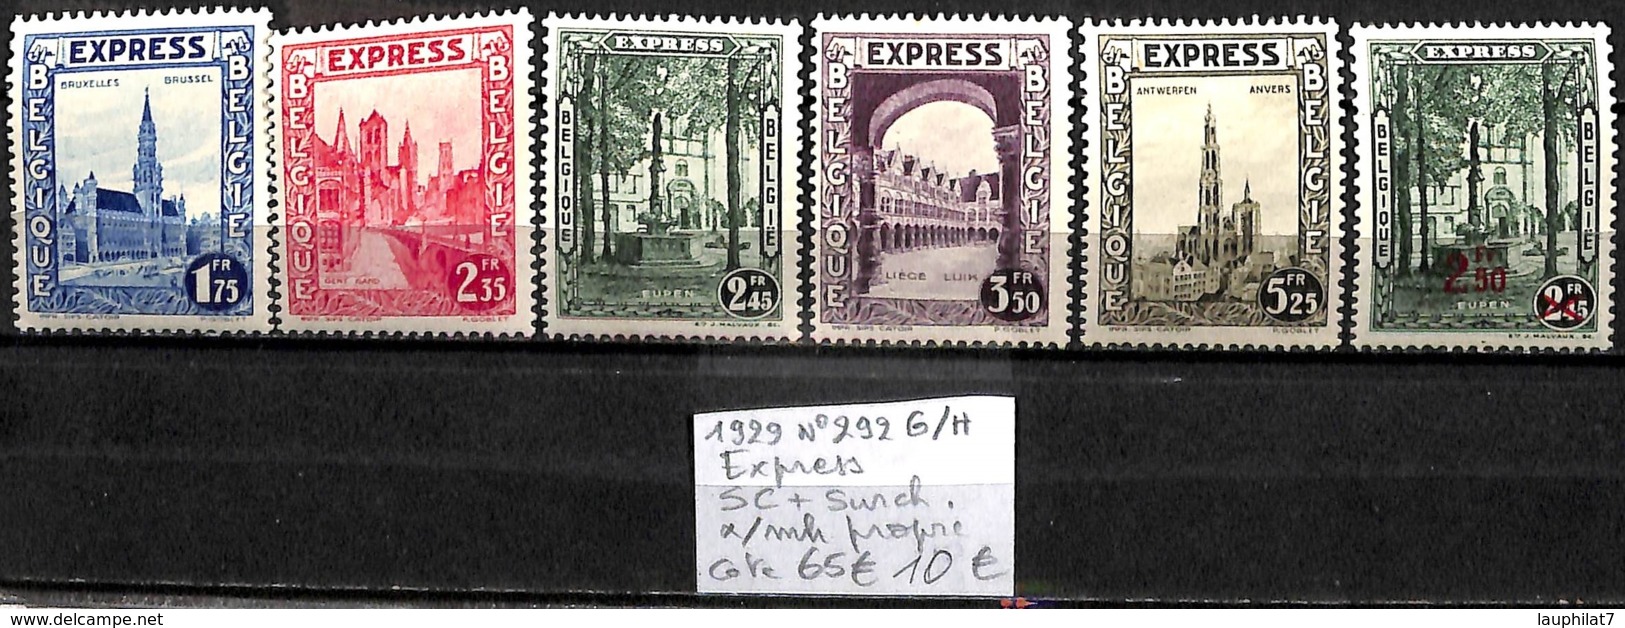 [846998]TB//*/Mh-c:65e-Belgique 1929 - N° 292G/H, Express, SC + Surcharge */mh Propre - Nuovi